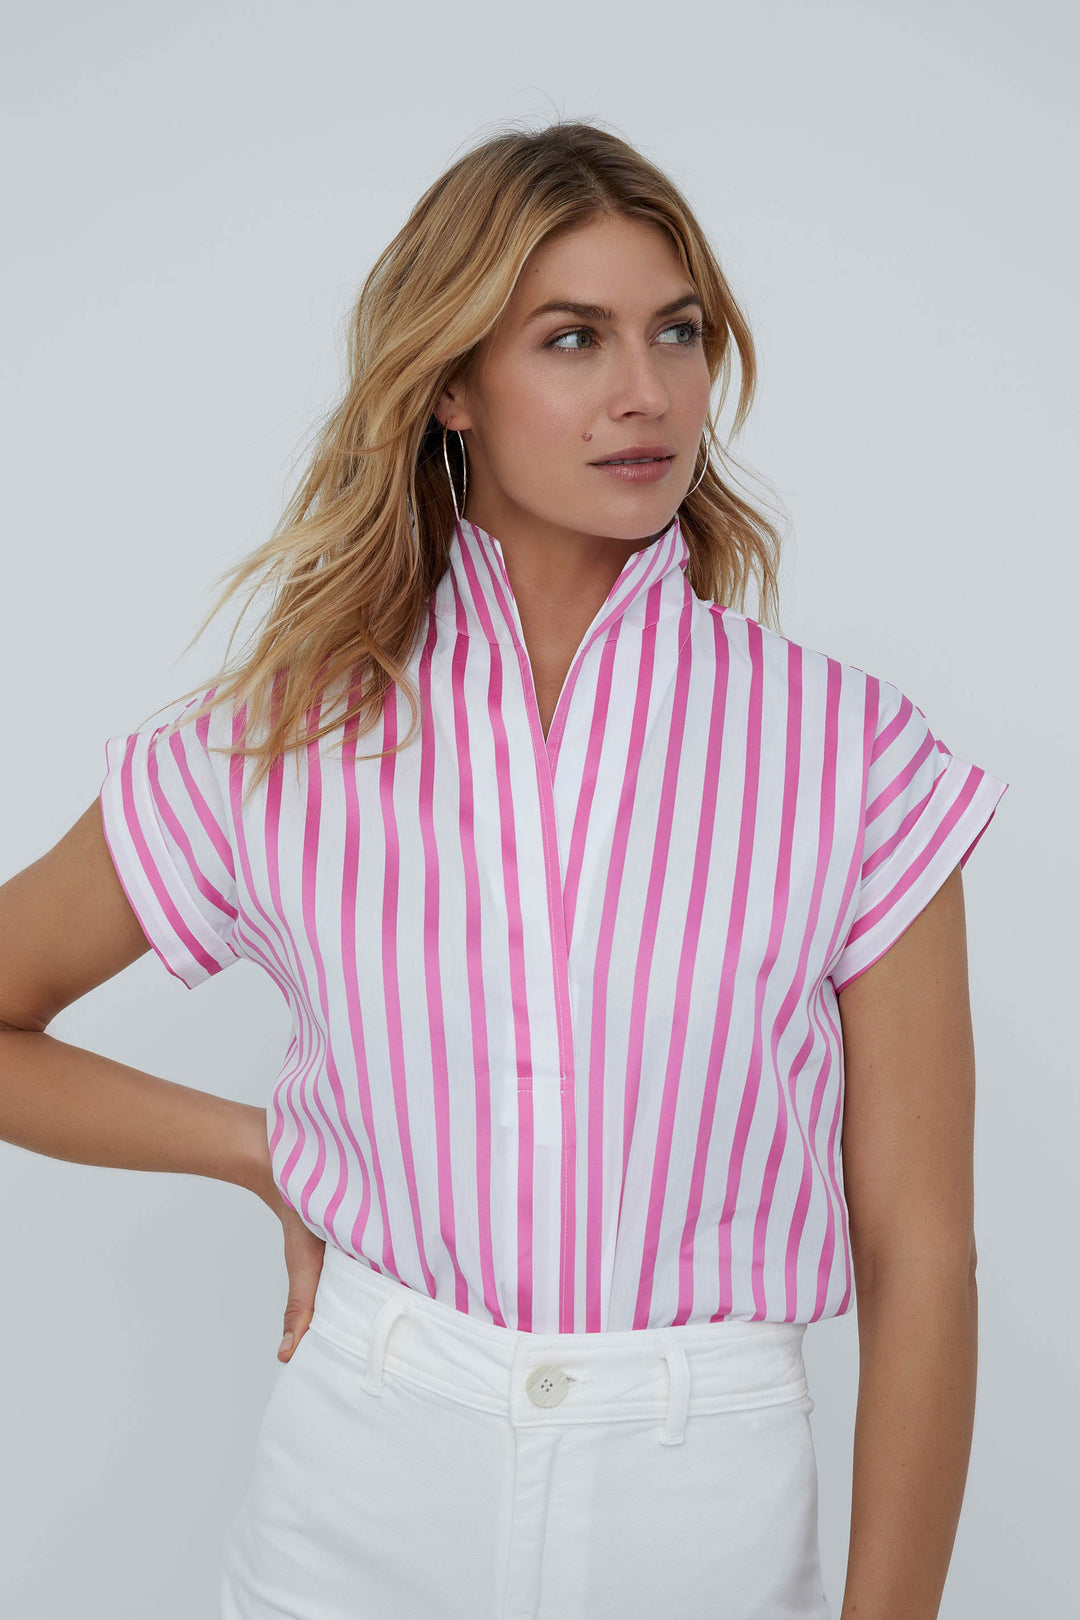 Sarah Alexandra Pretty in Pink Cap Sleeve Shirt